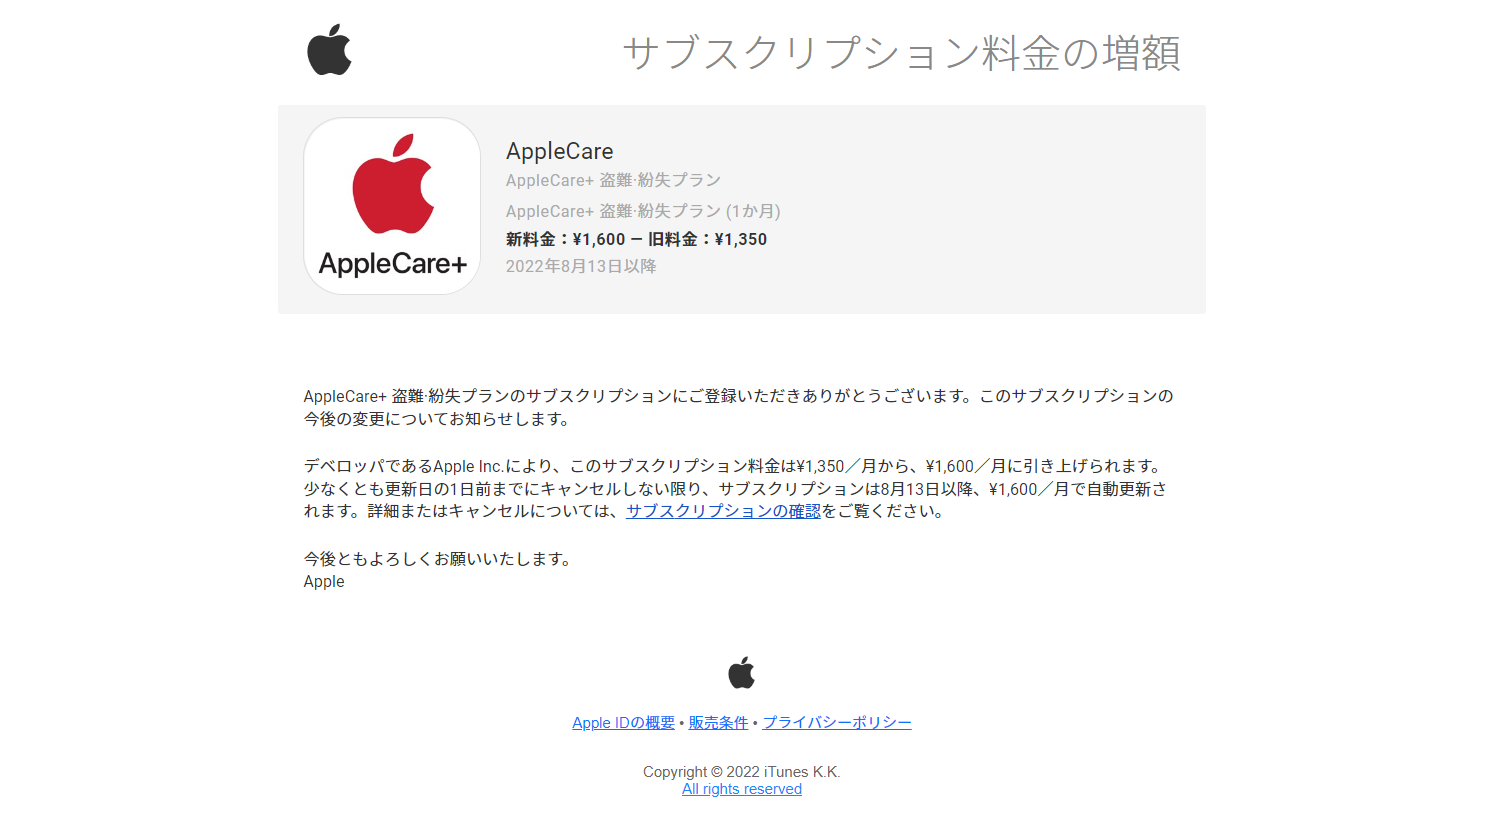 Apple Care+の価格改定